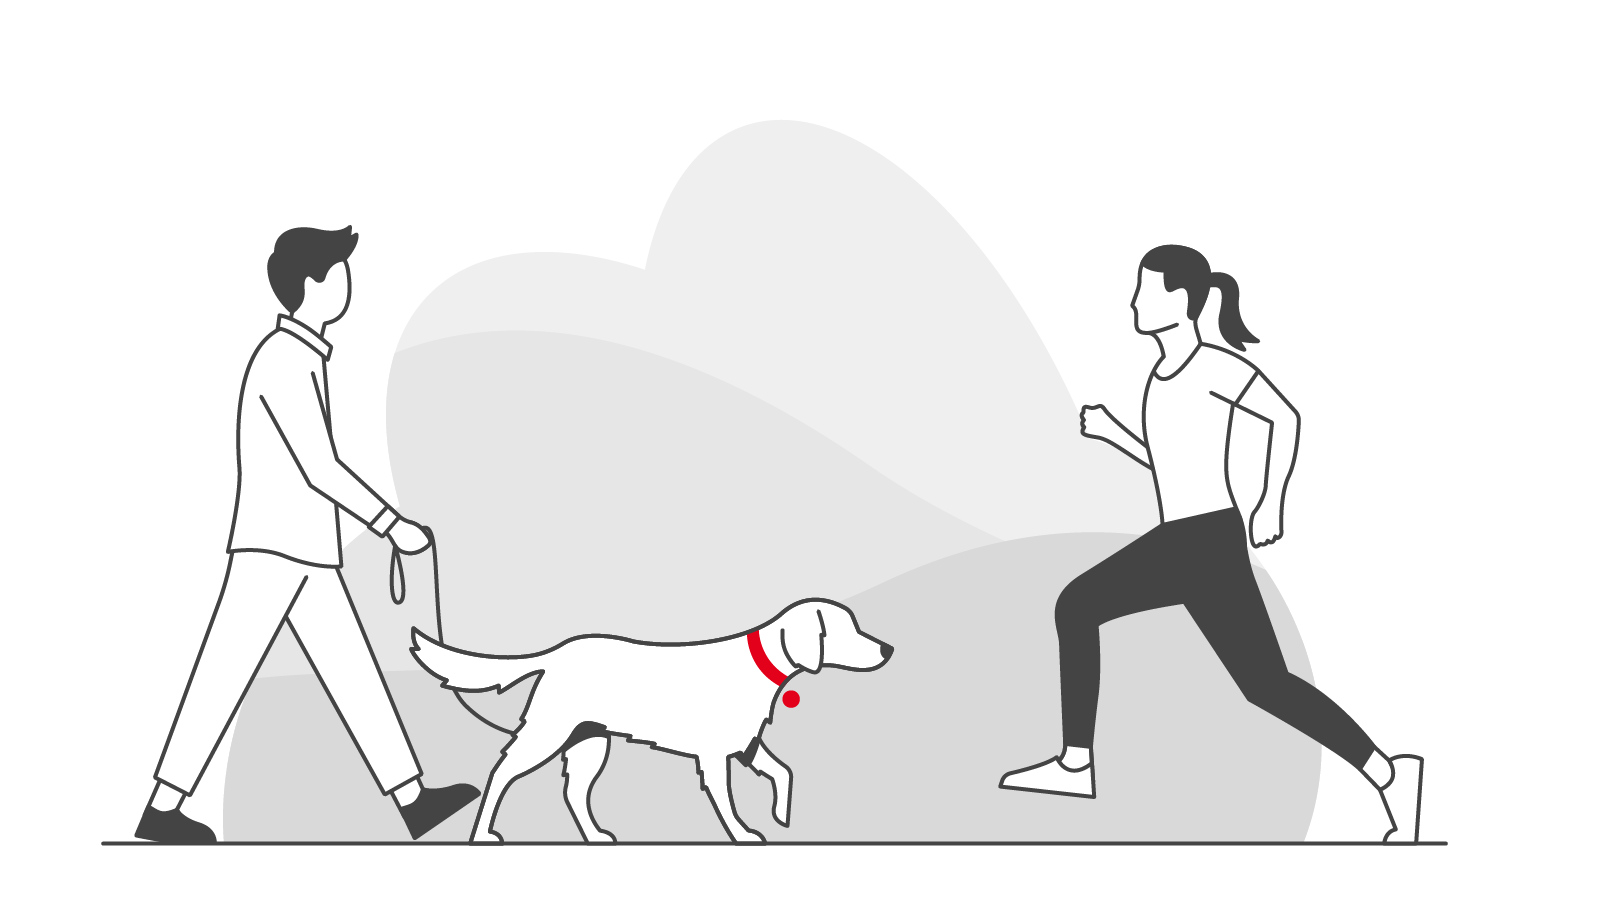 Person jogging past a dog outside illustration